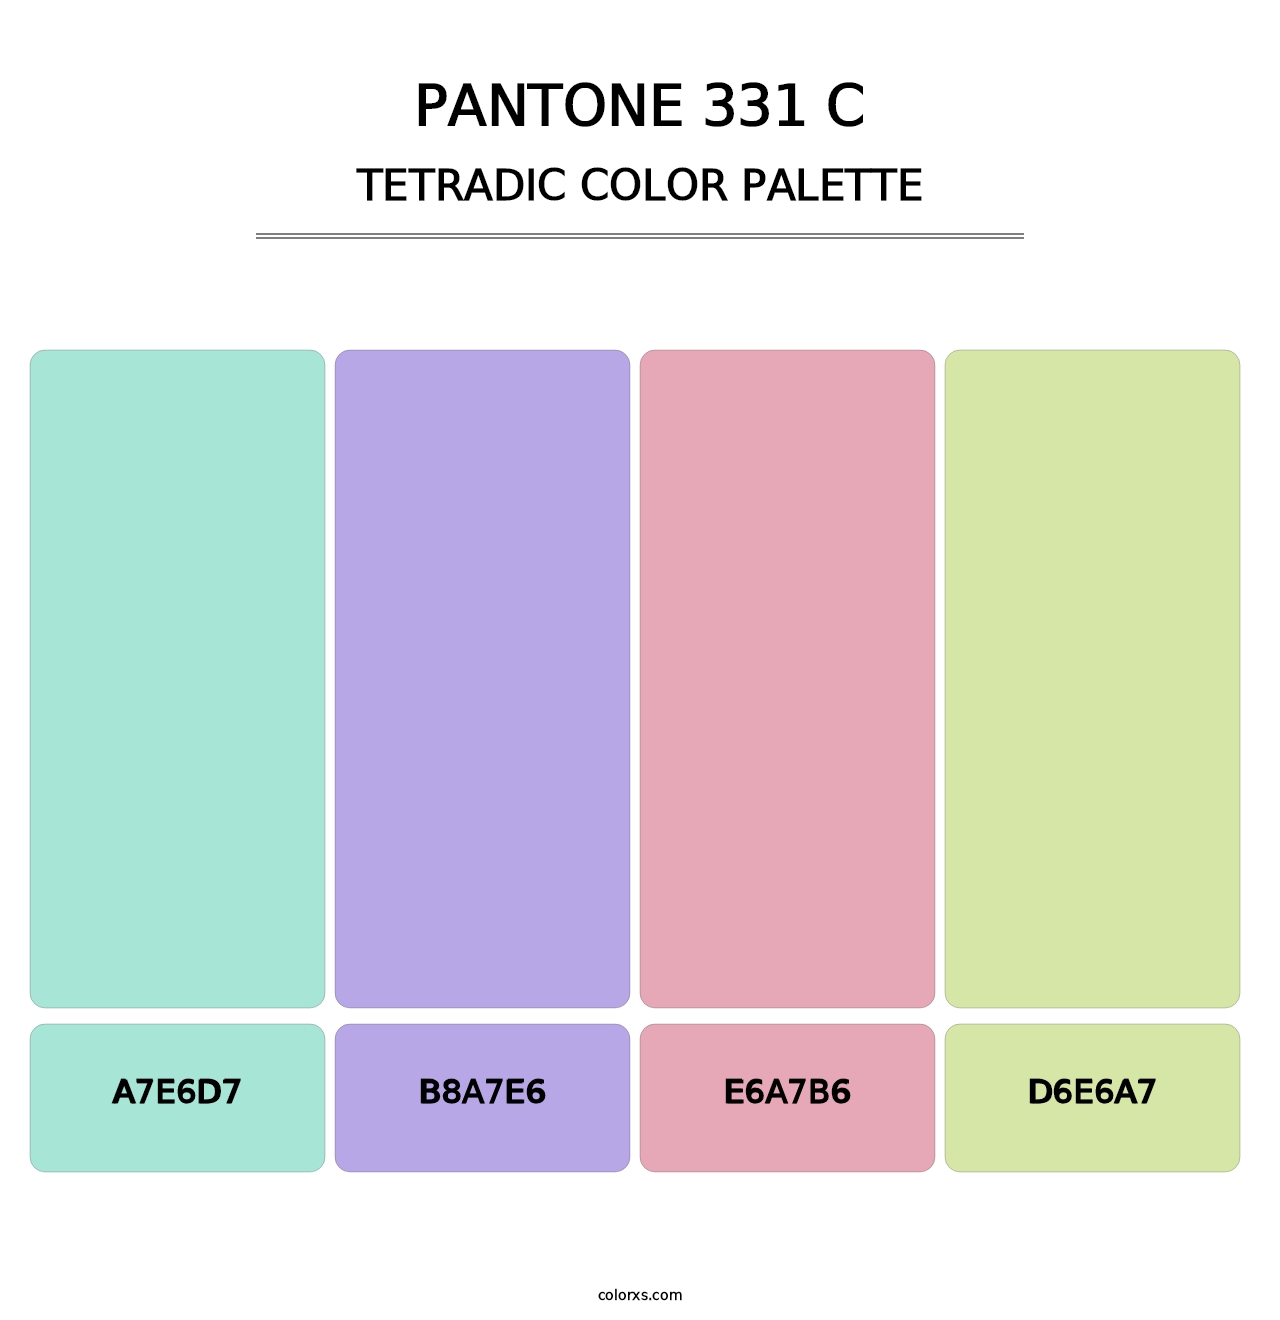 PANTONE 331 C - Tetradic Color Palette